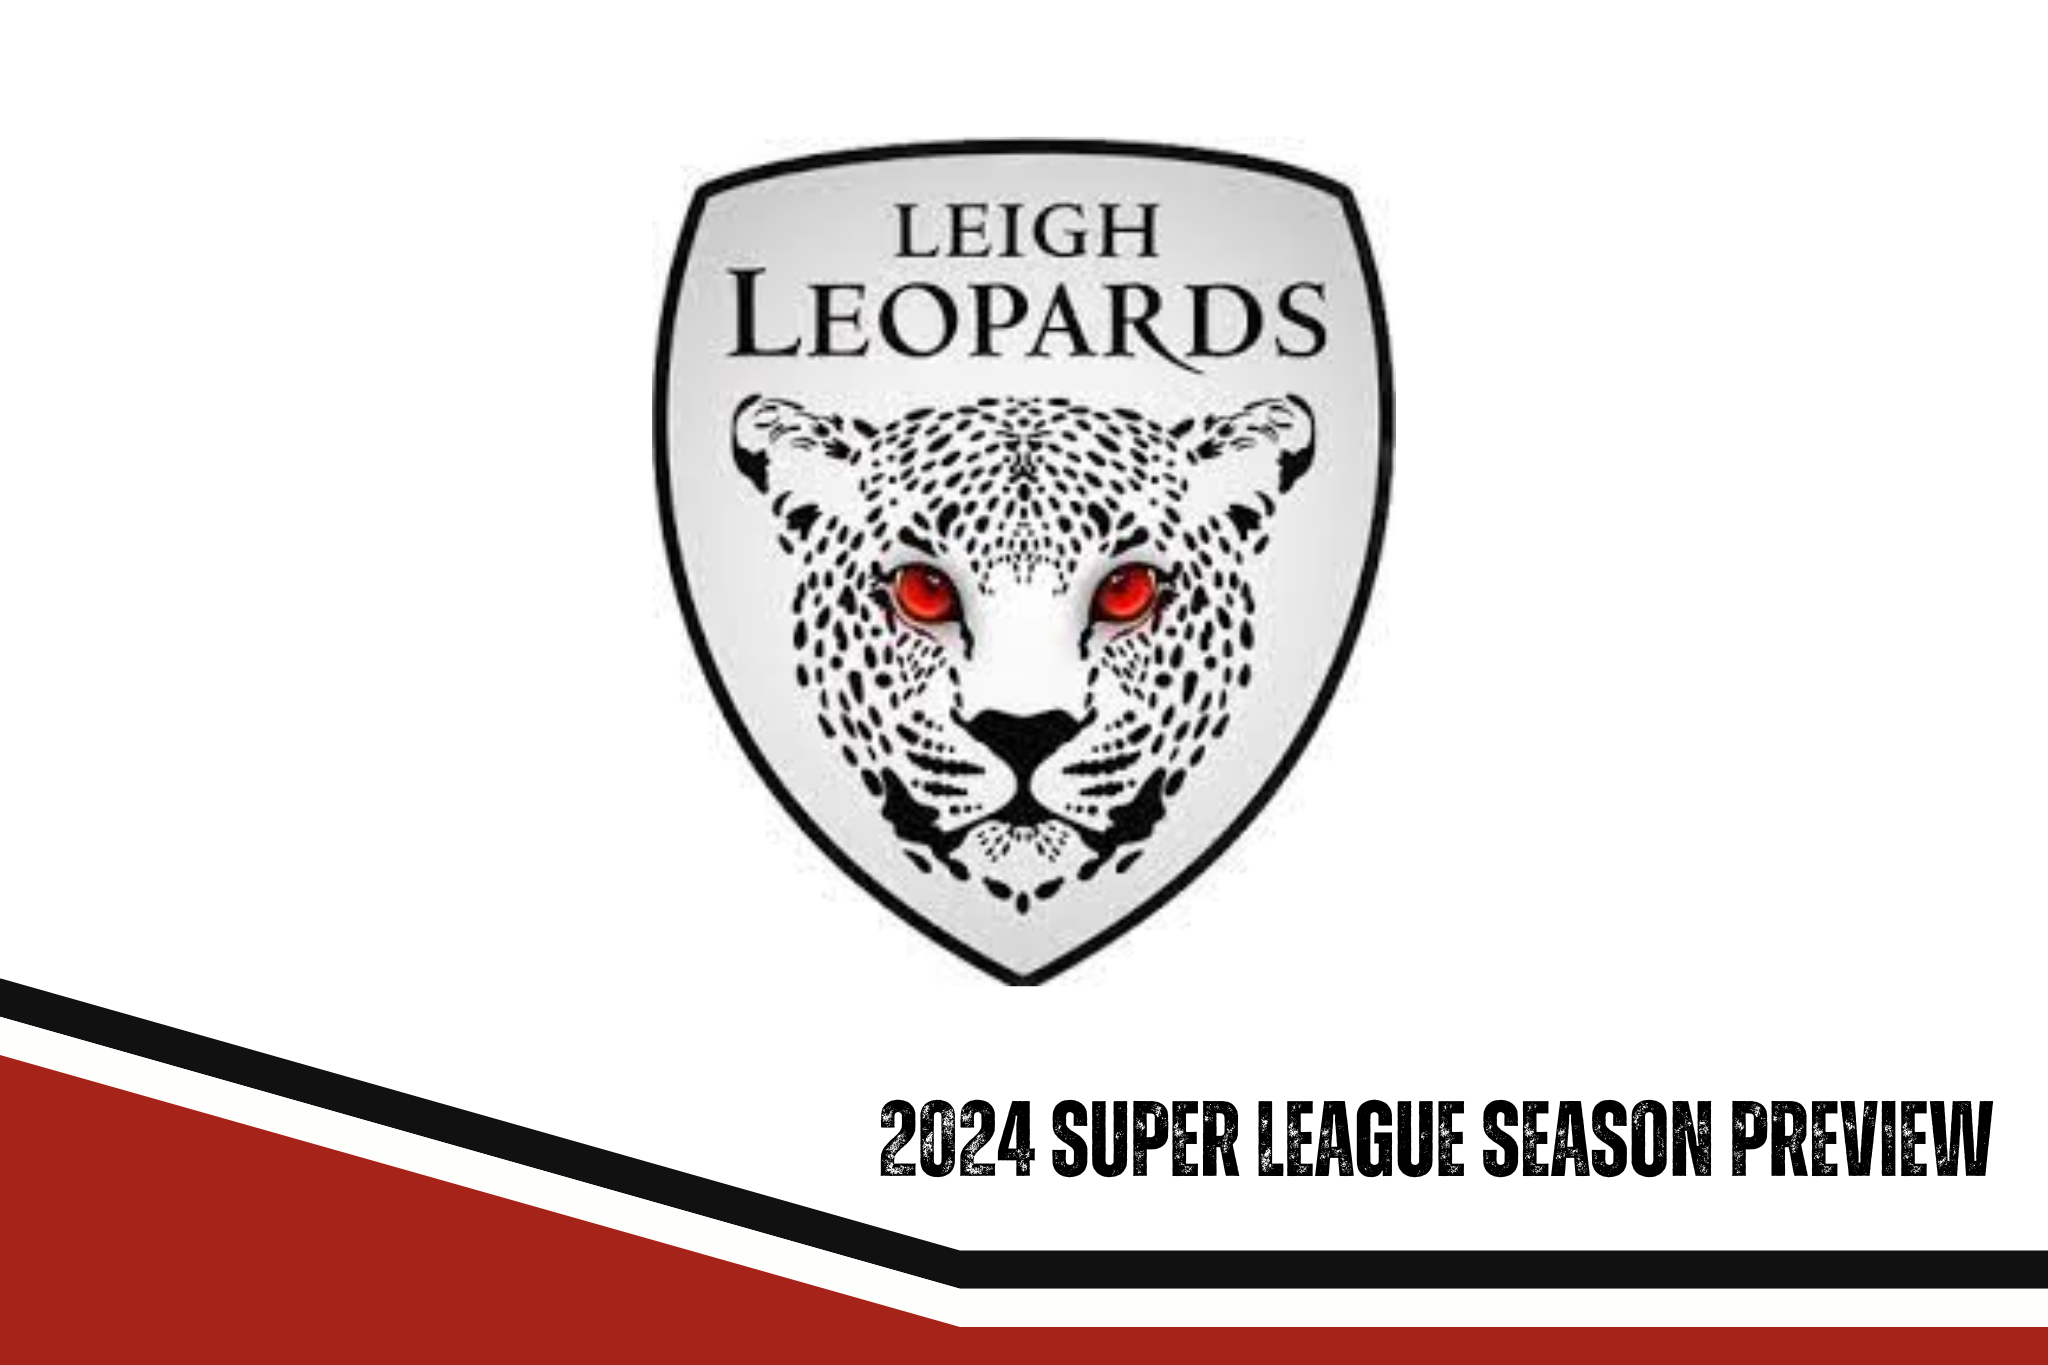 Leigh Leopards 2024 season preview